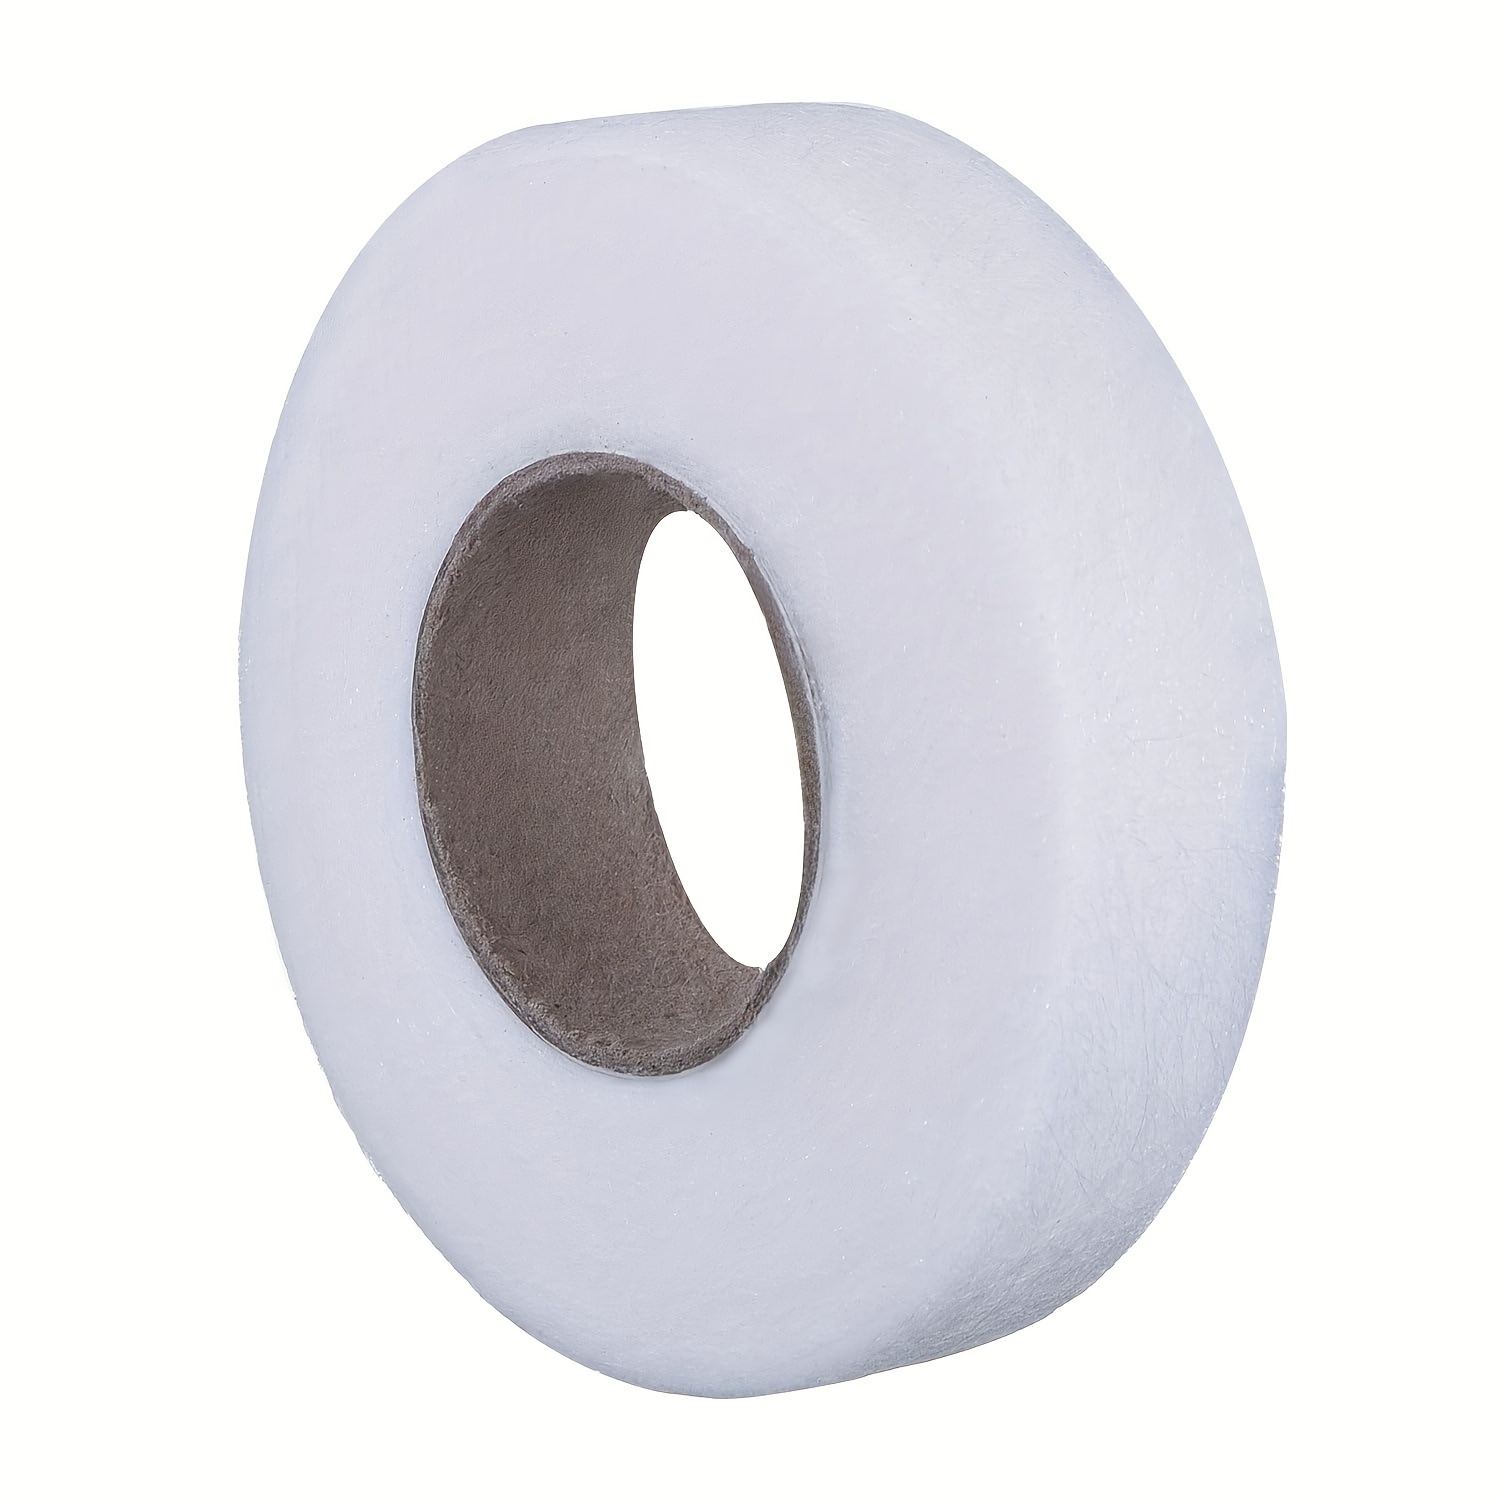 2pcs Hem Tape Iron-On Adhesive Fabric Fusing Tape Each 27 Yards Length, 1  inch/2.5cm Width